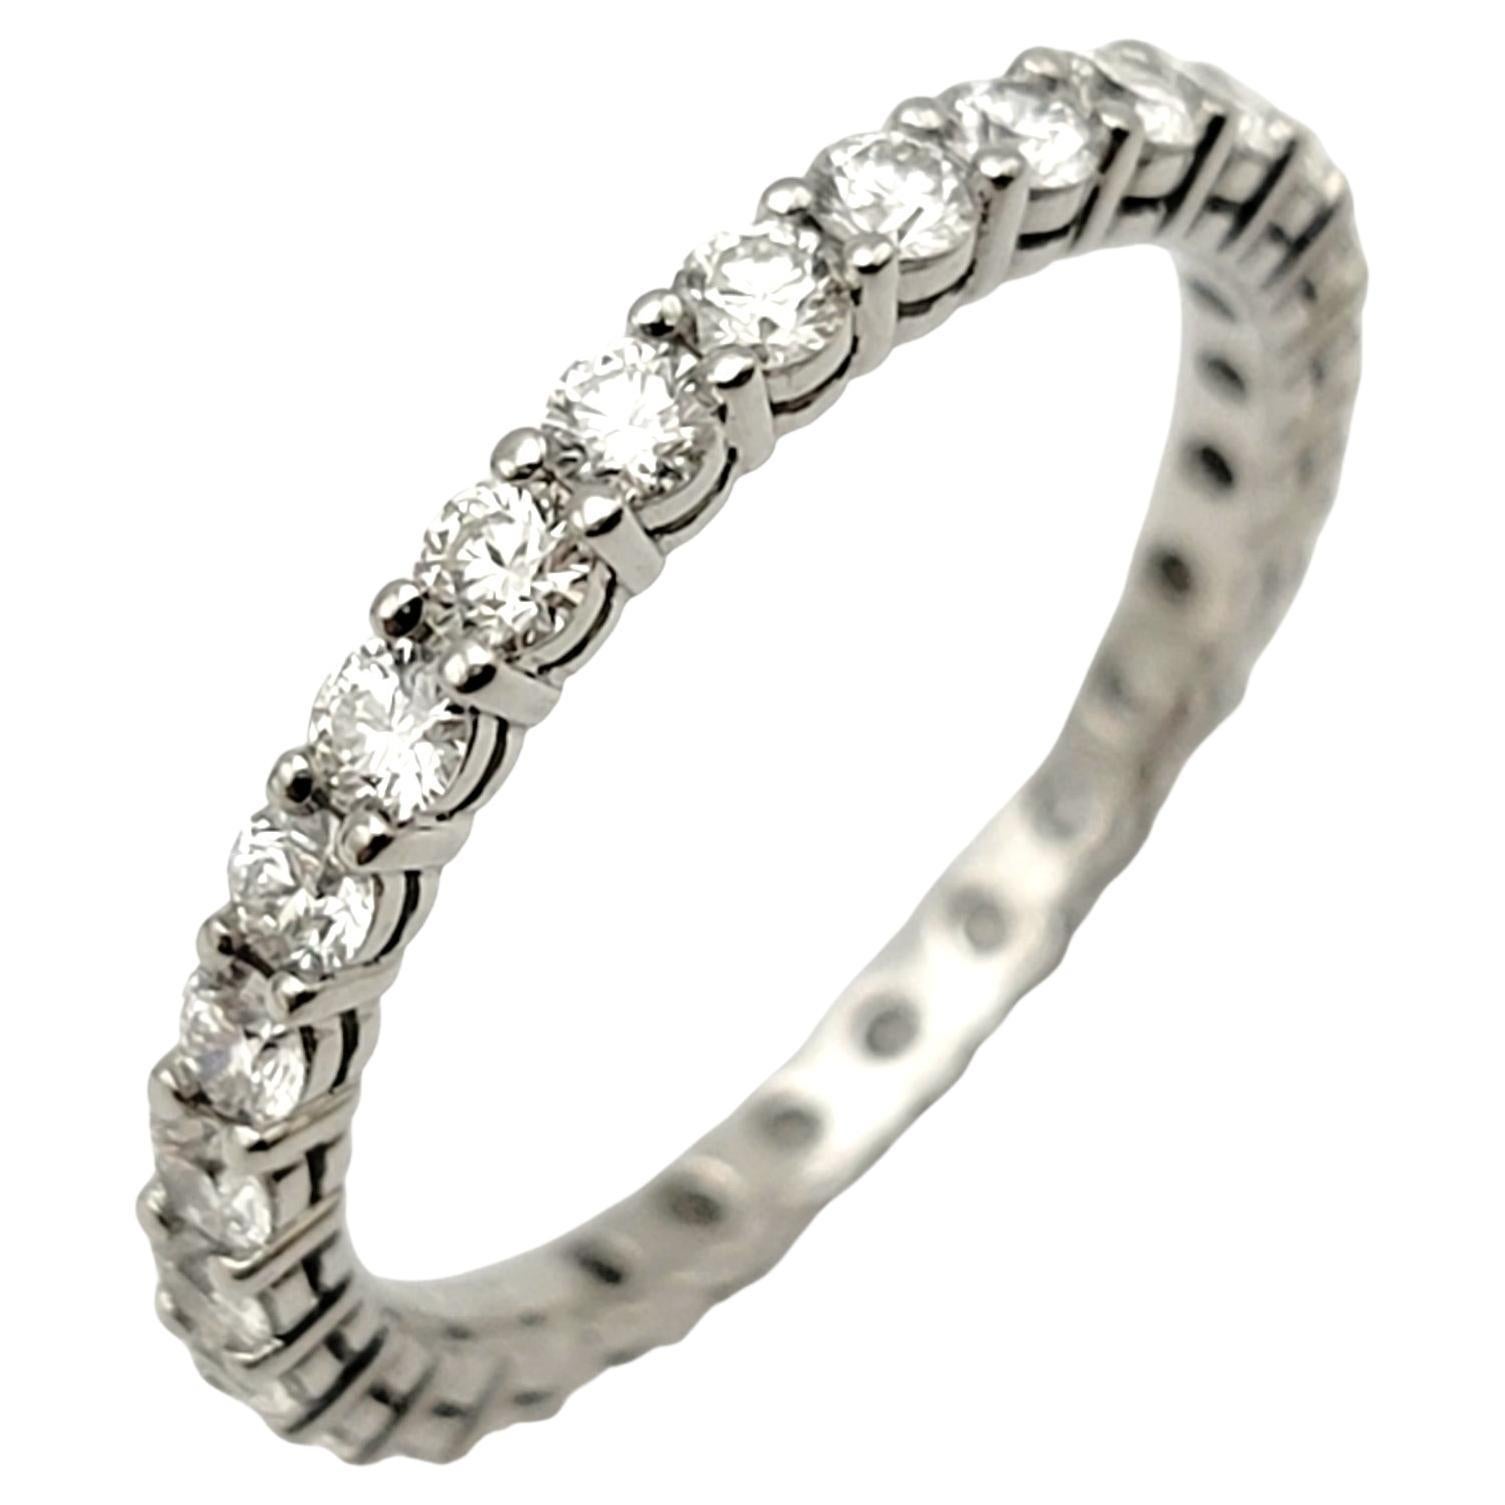 Tiffany & Co. Embrace Full Eternity Diamond Platinum Band Ring .85 Carat Total